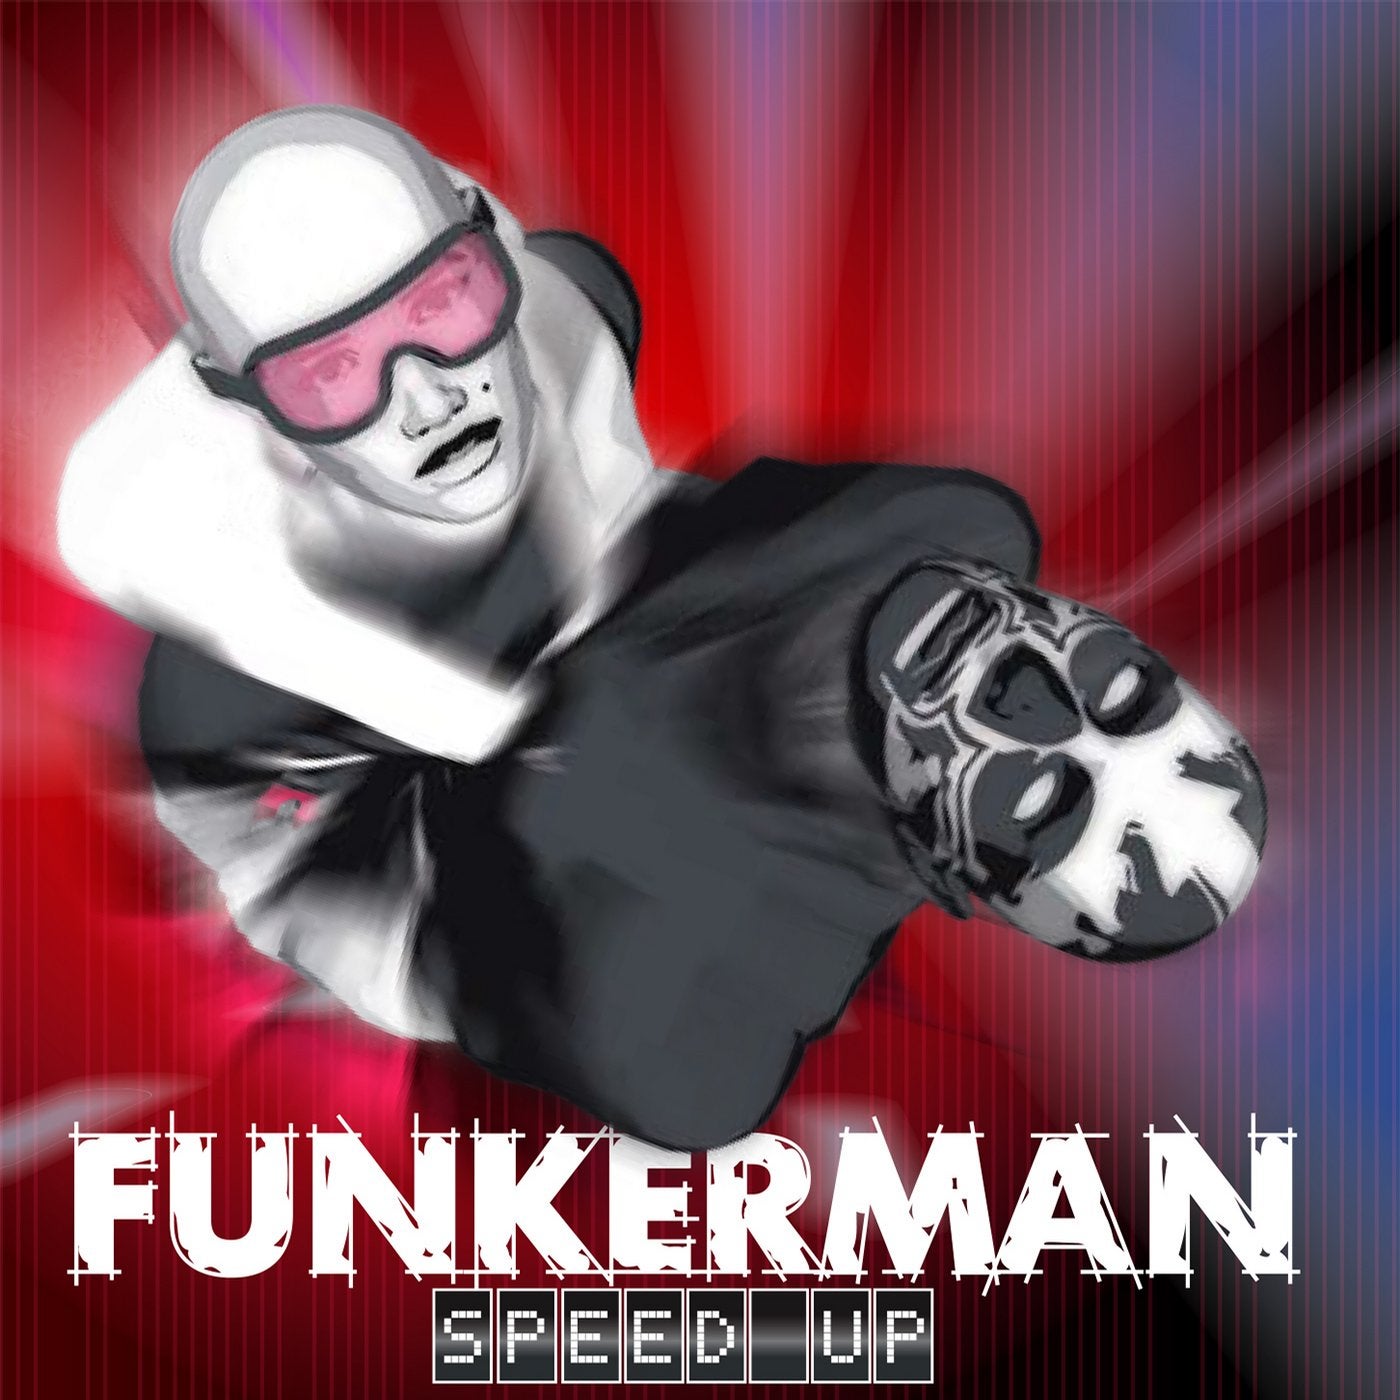 Funkerman Speed